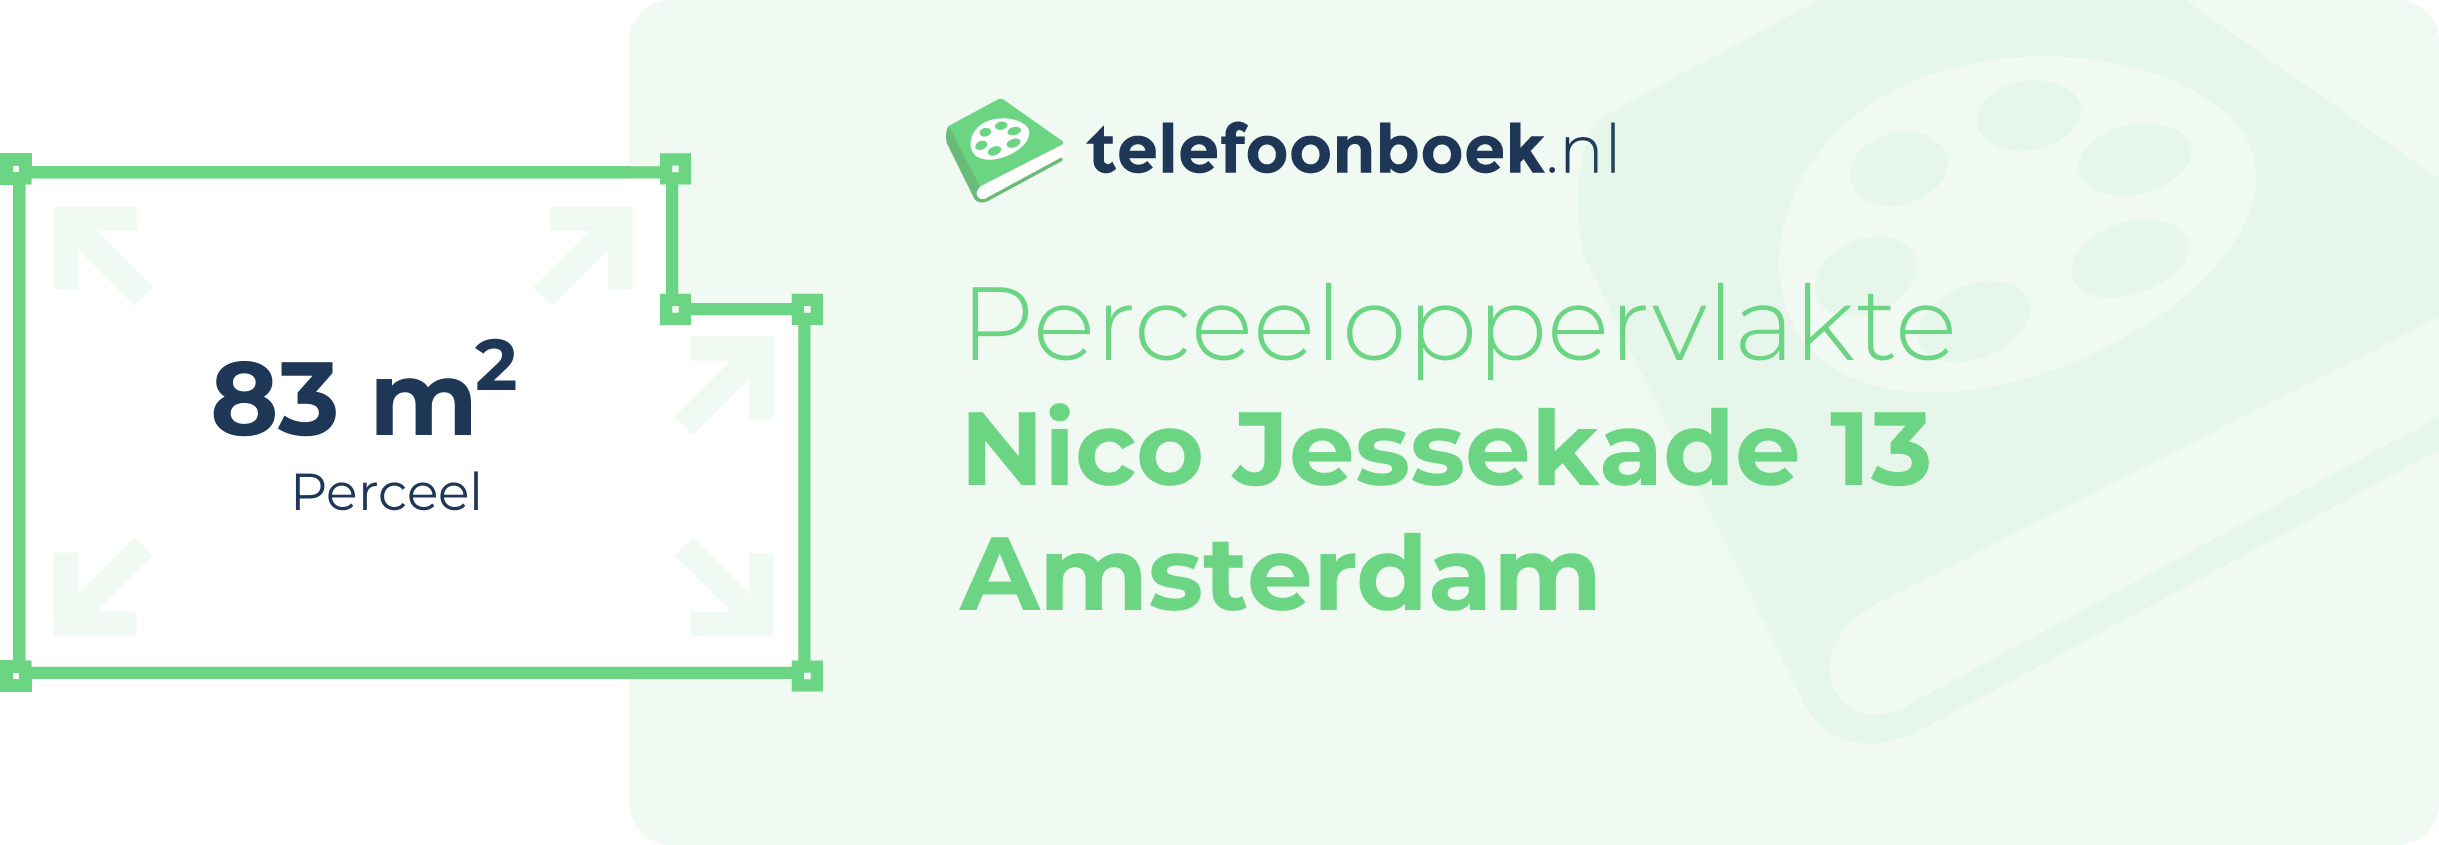 Perceeloppervlakte Nico Jessekade 13 Amsterdam